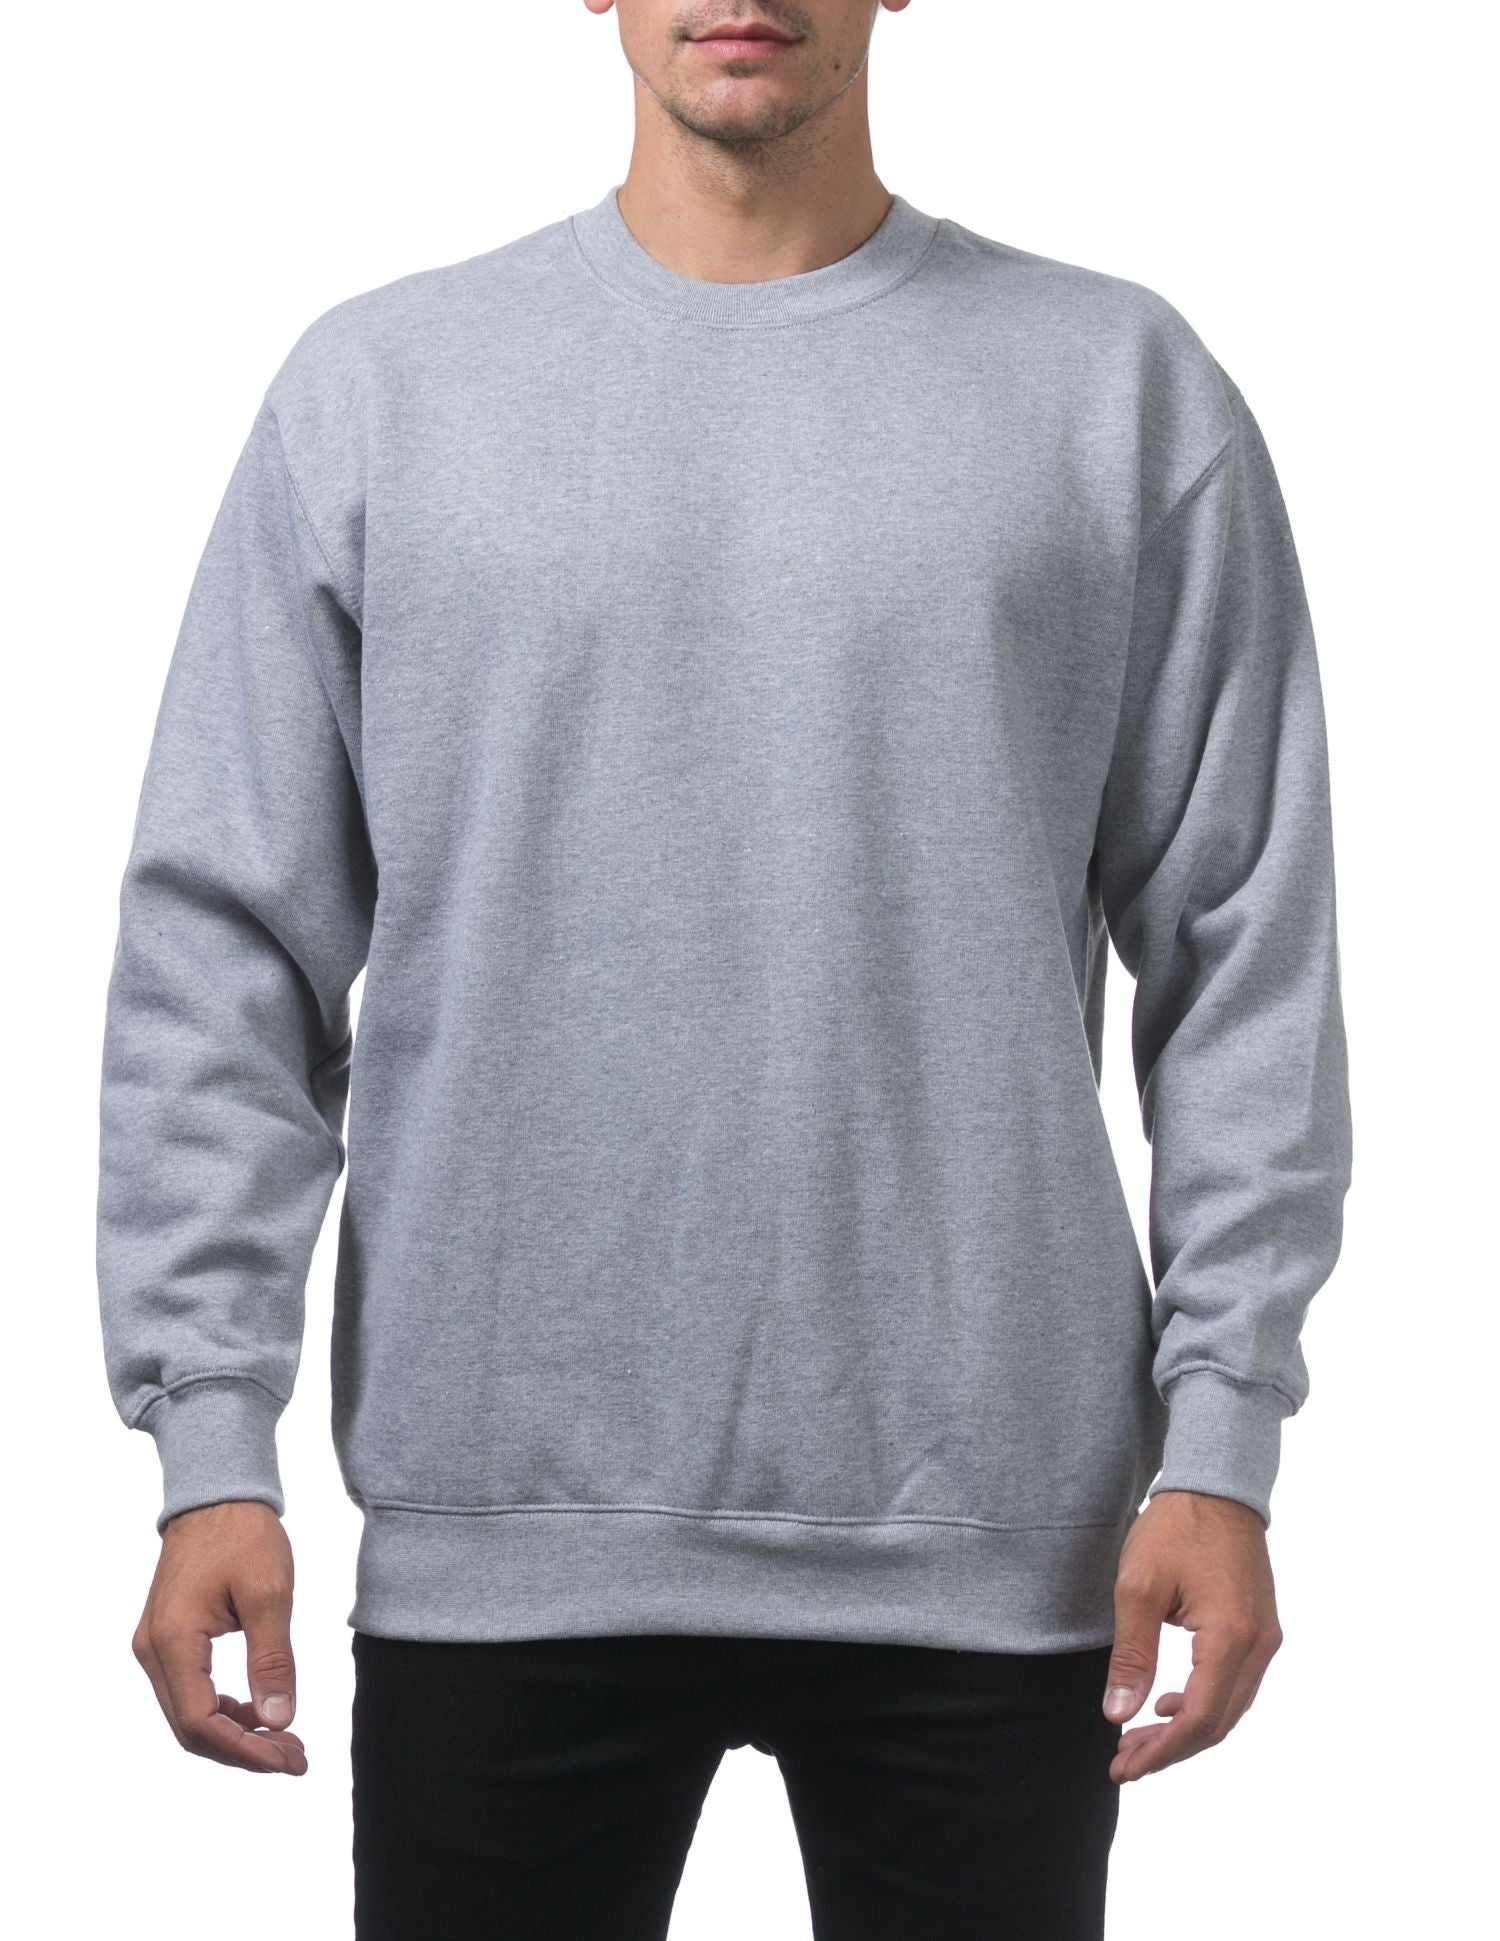 Pro Club Men's Comfort Crew Neck Fleece Pullover Sweater - Heather Gray - Small - Pro-Distributing